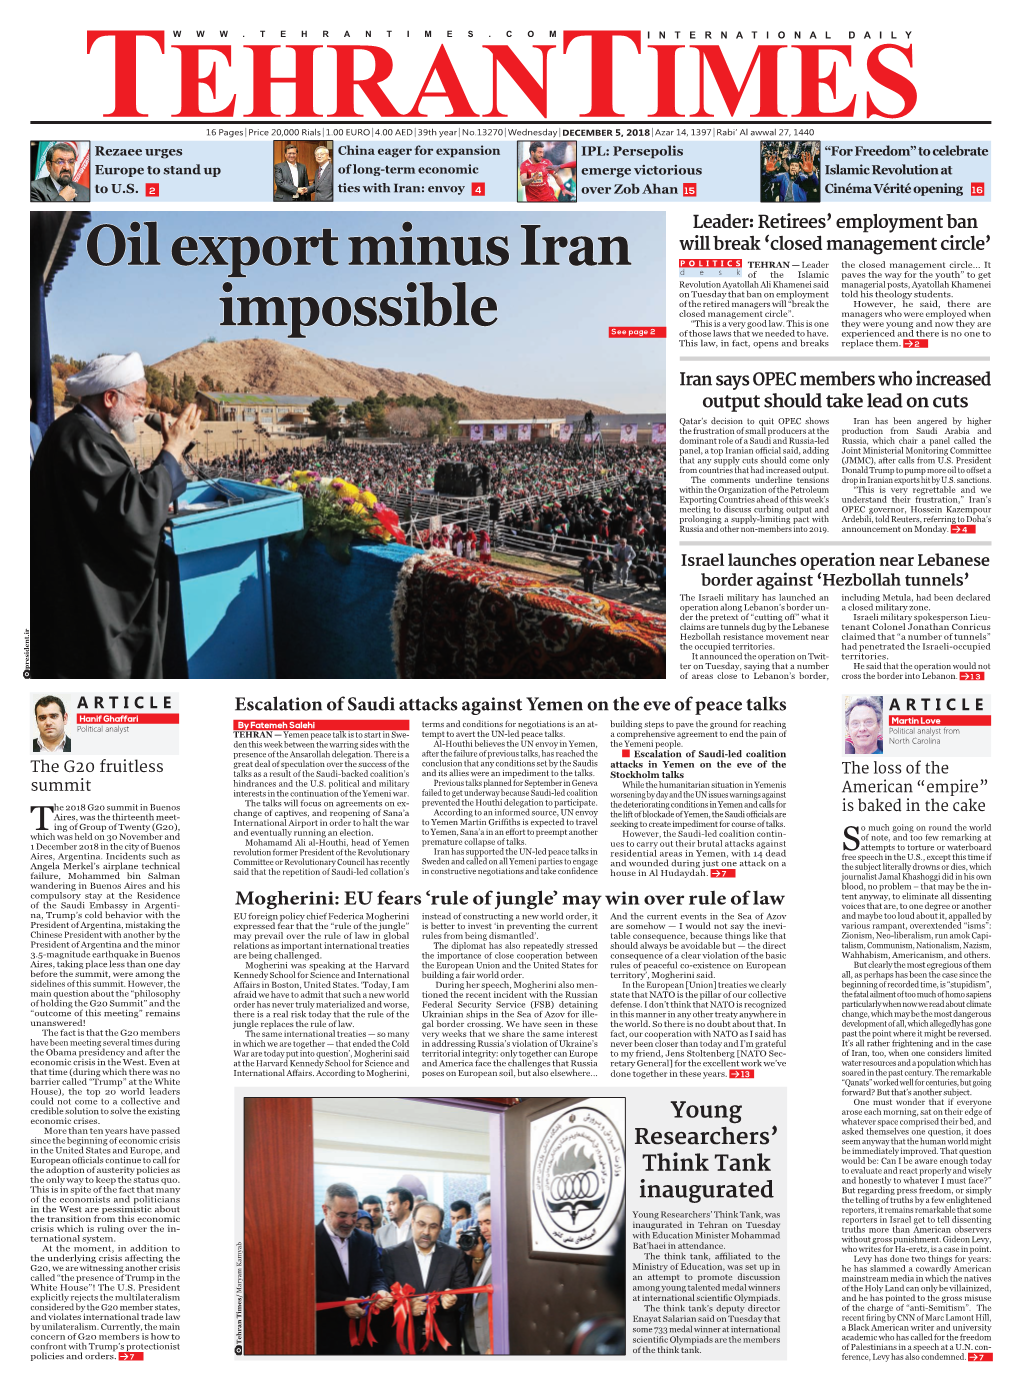 Oil Export Minus Iran Impossible in Persian Gulf, Rouhani Warns U.S